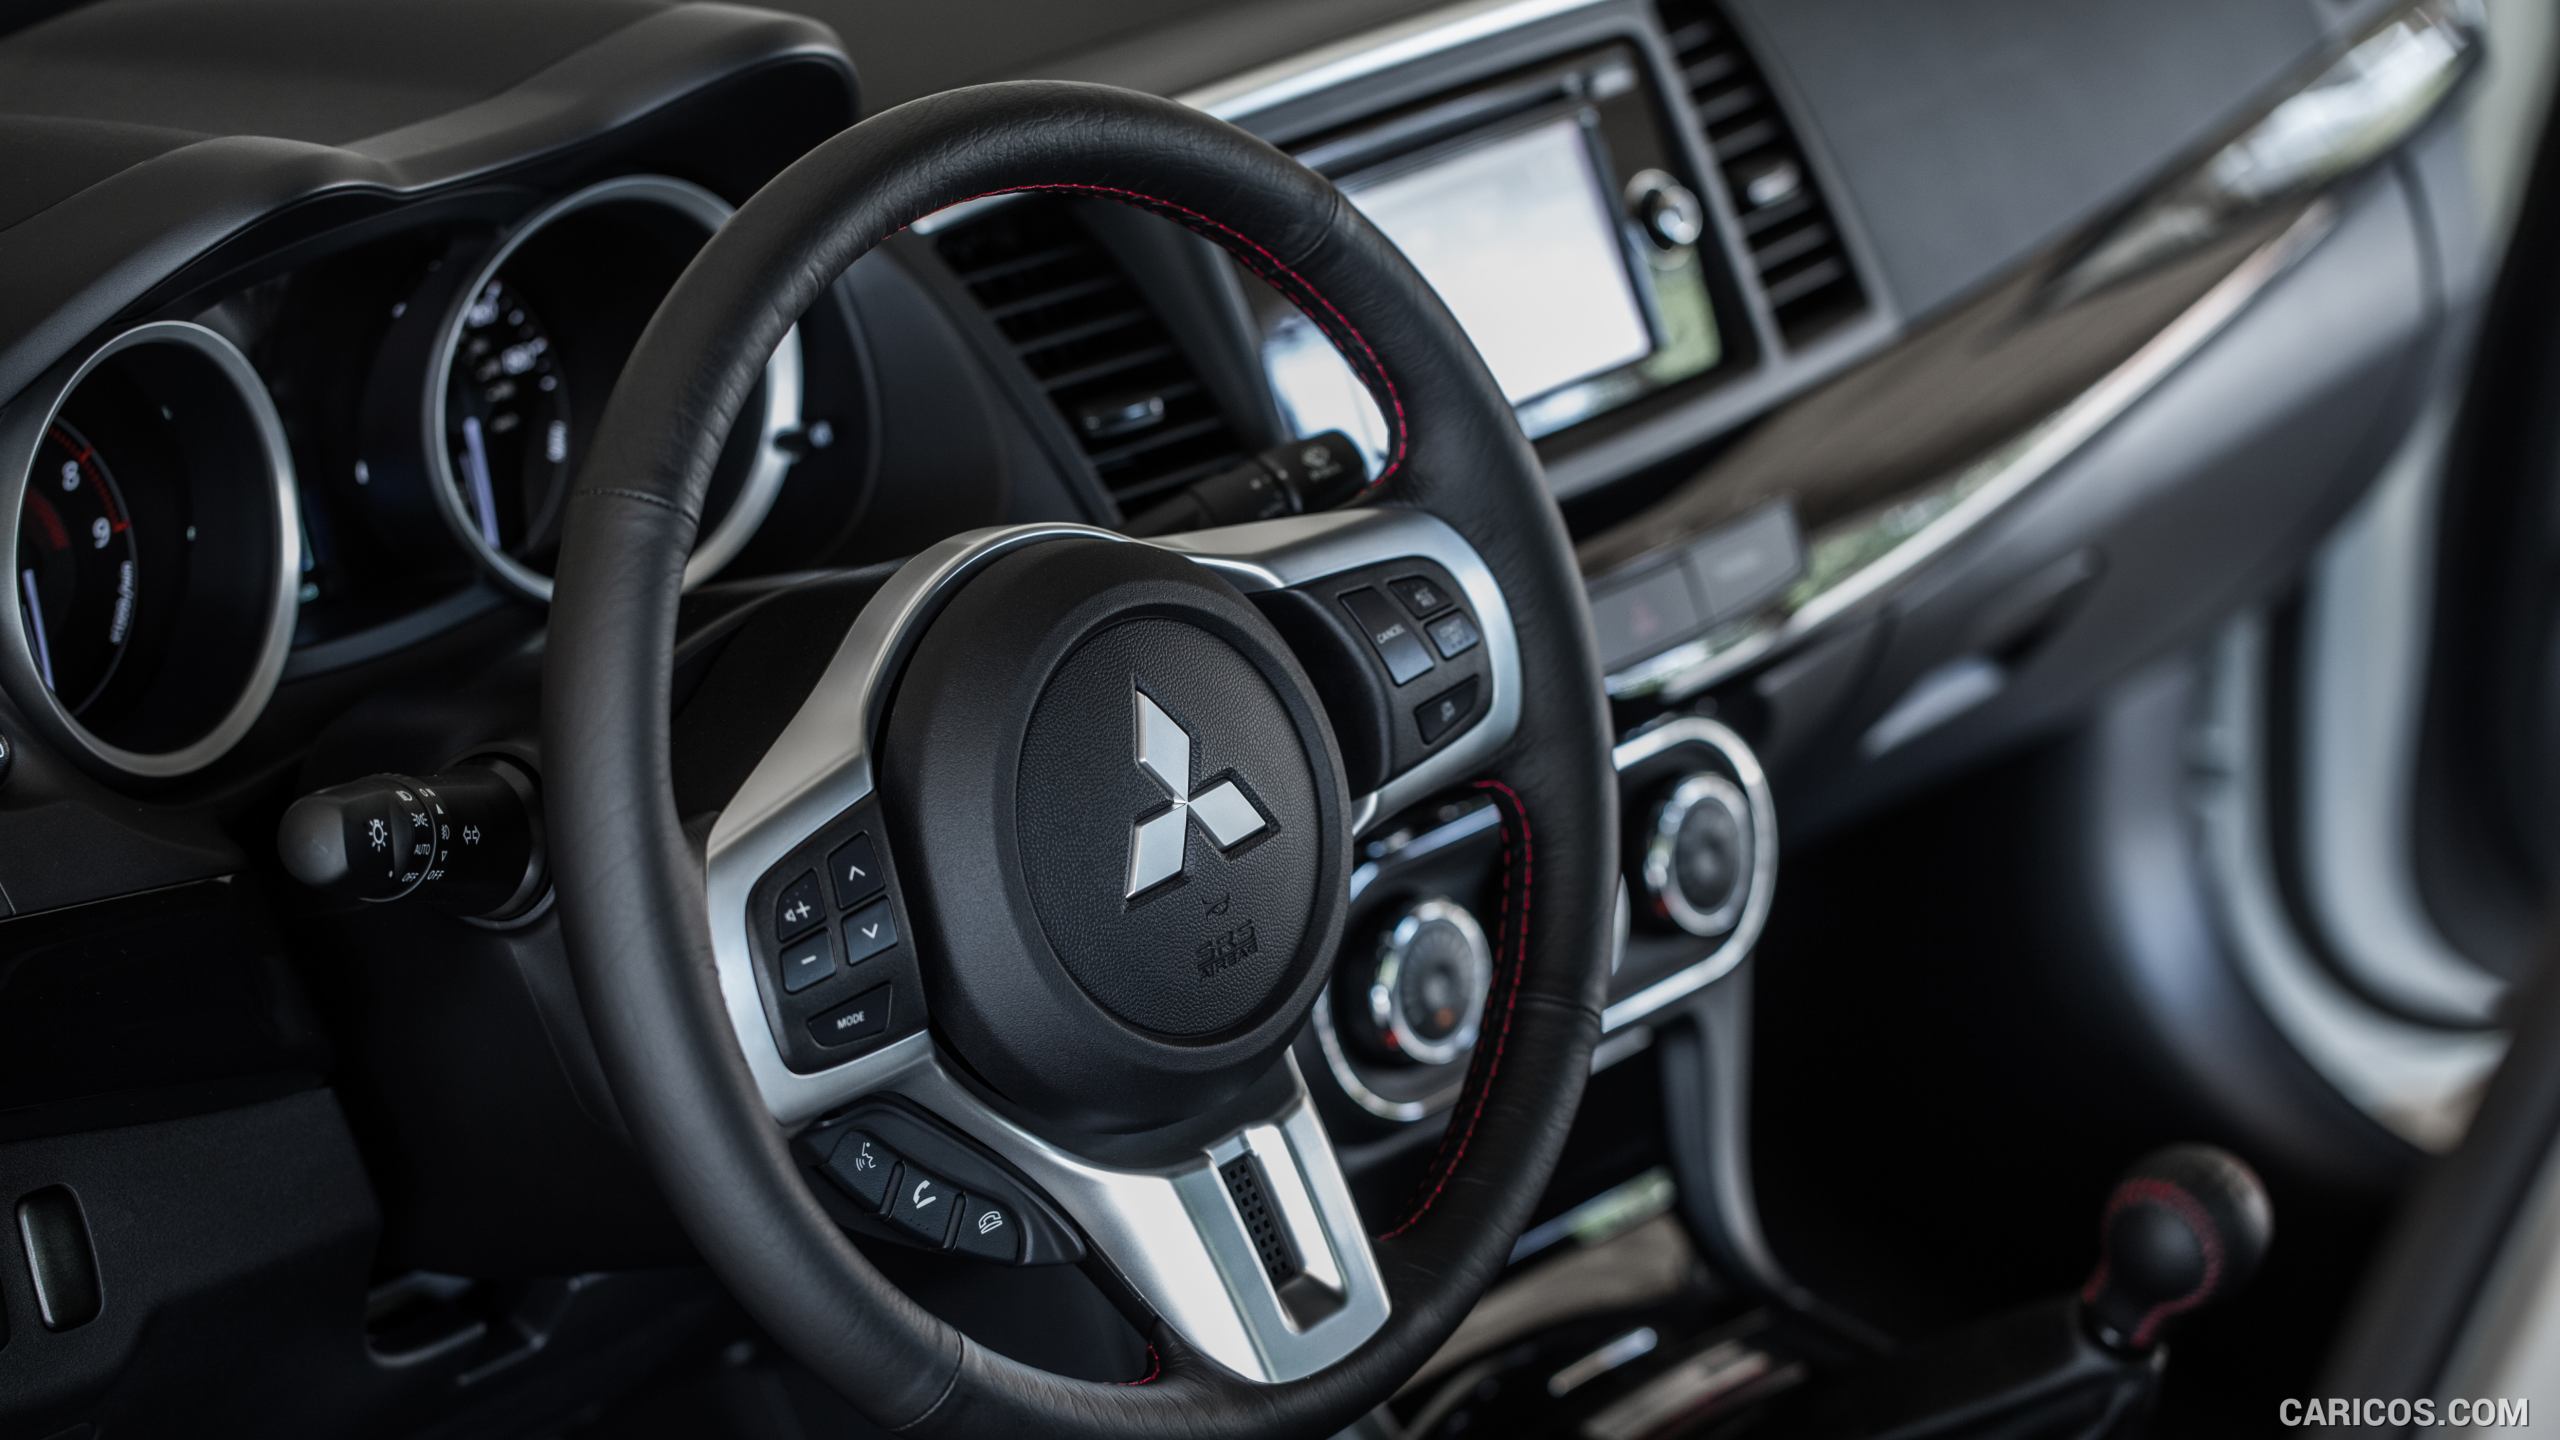 2015 Mitsubishi Lancer Evolution Final Edition - Interior, Steering Wheel, #21 of 30